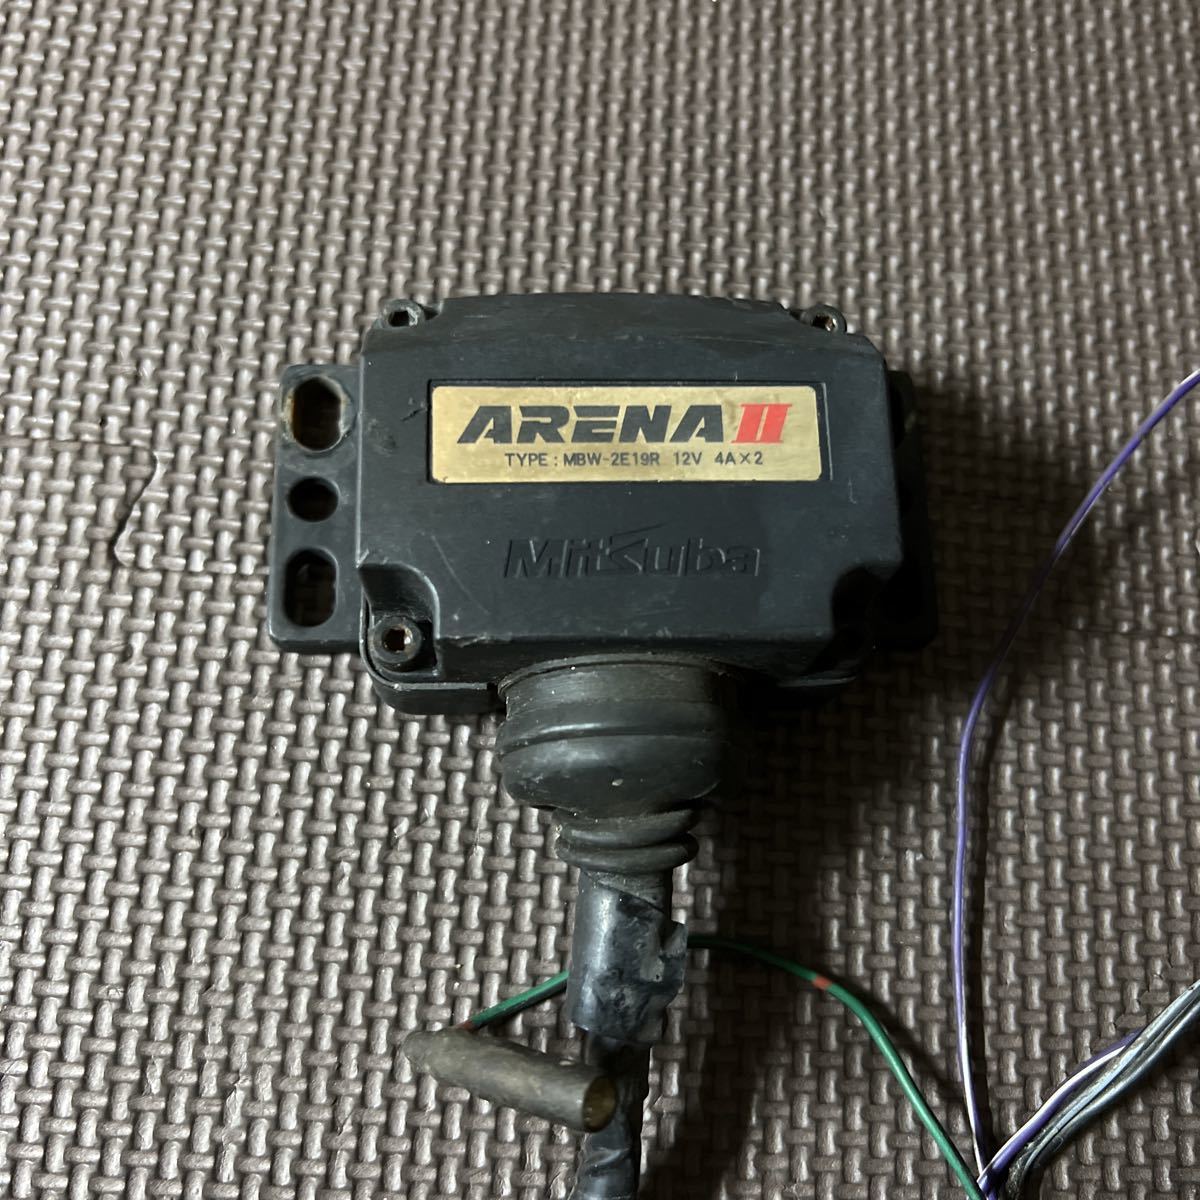  operation not yet verification Mitsuba ARENAⅡ MBW-2E19R 12V 4A×2 Arena horn relay 